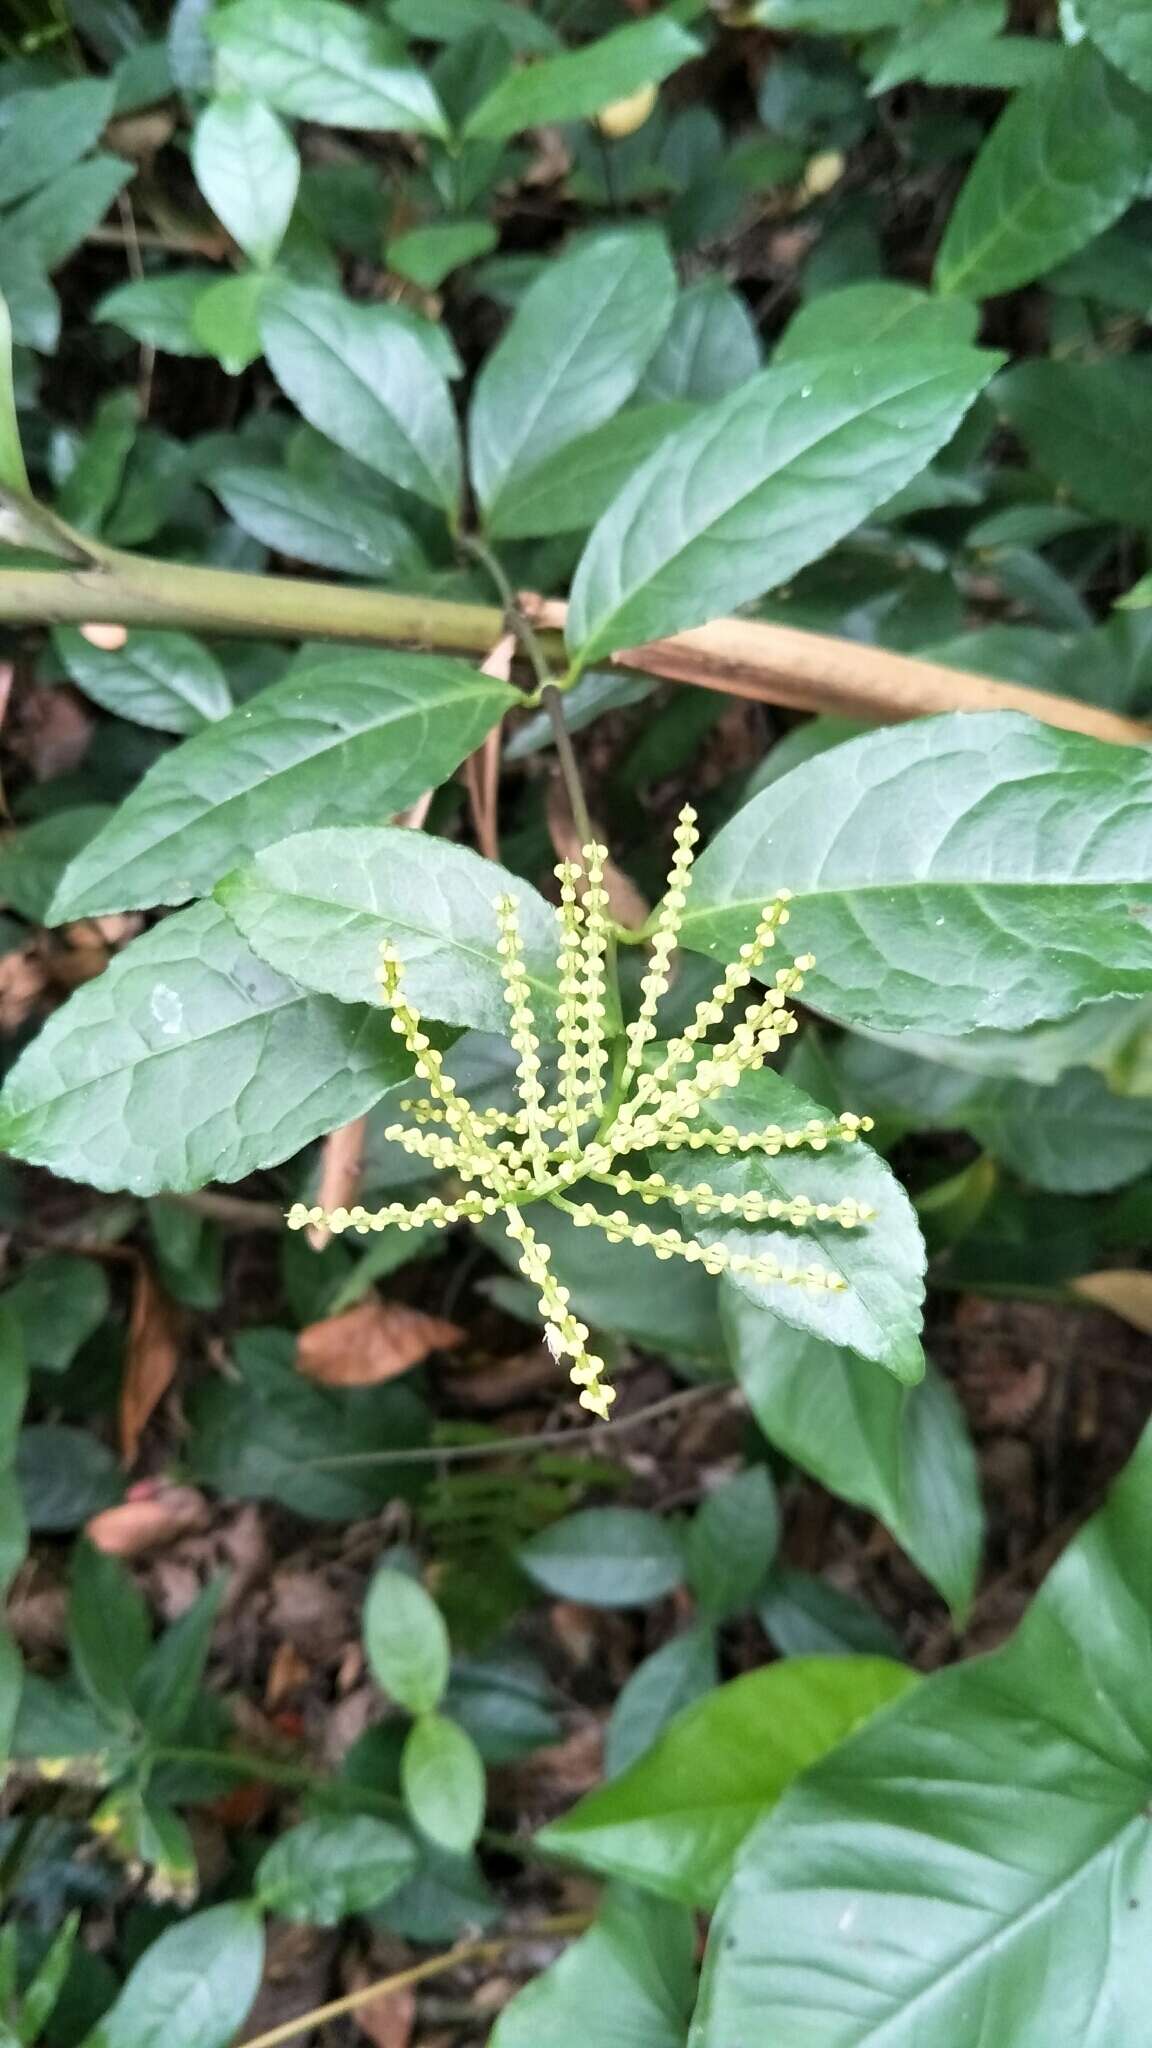 Chloranthus resmi